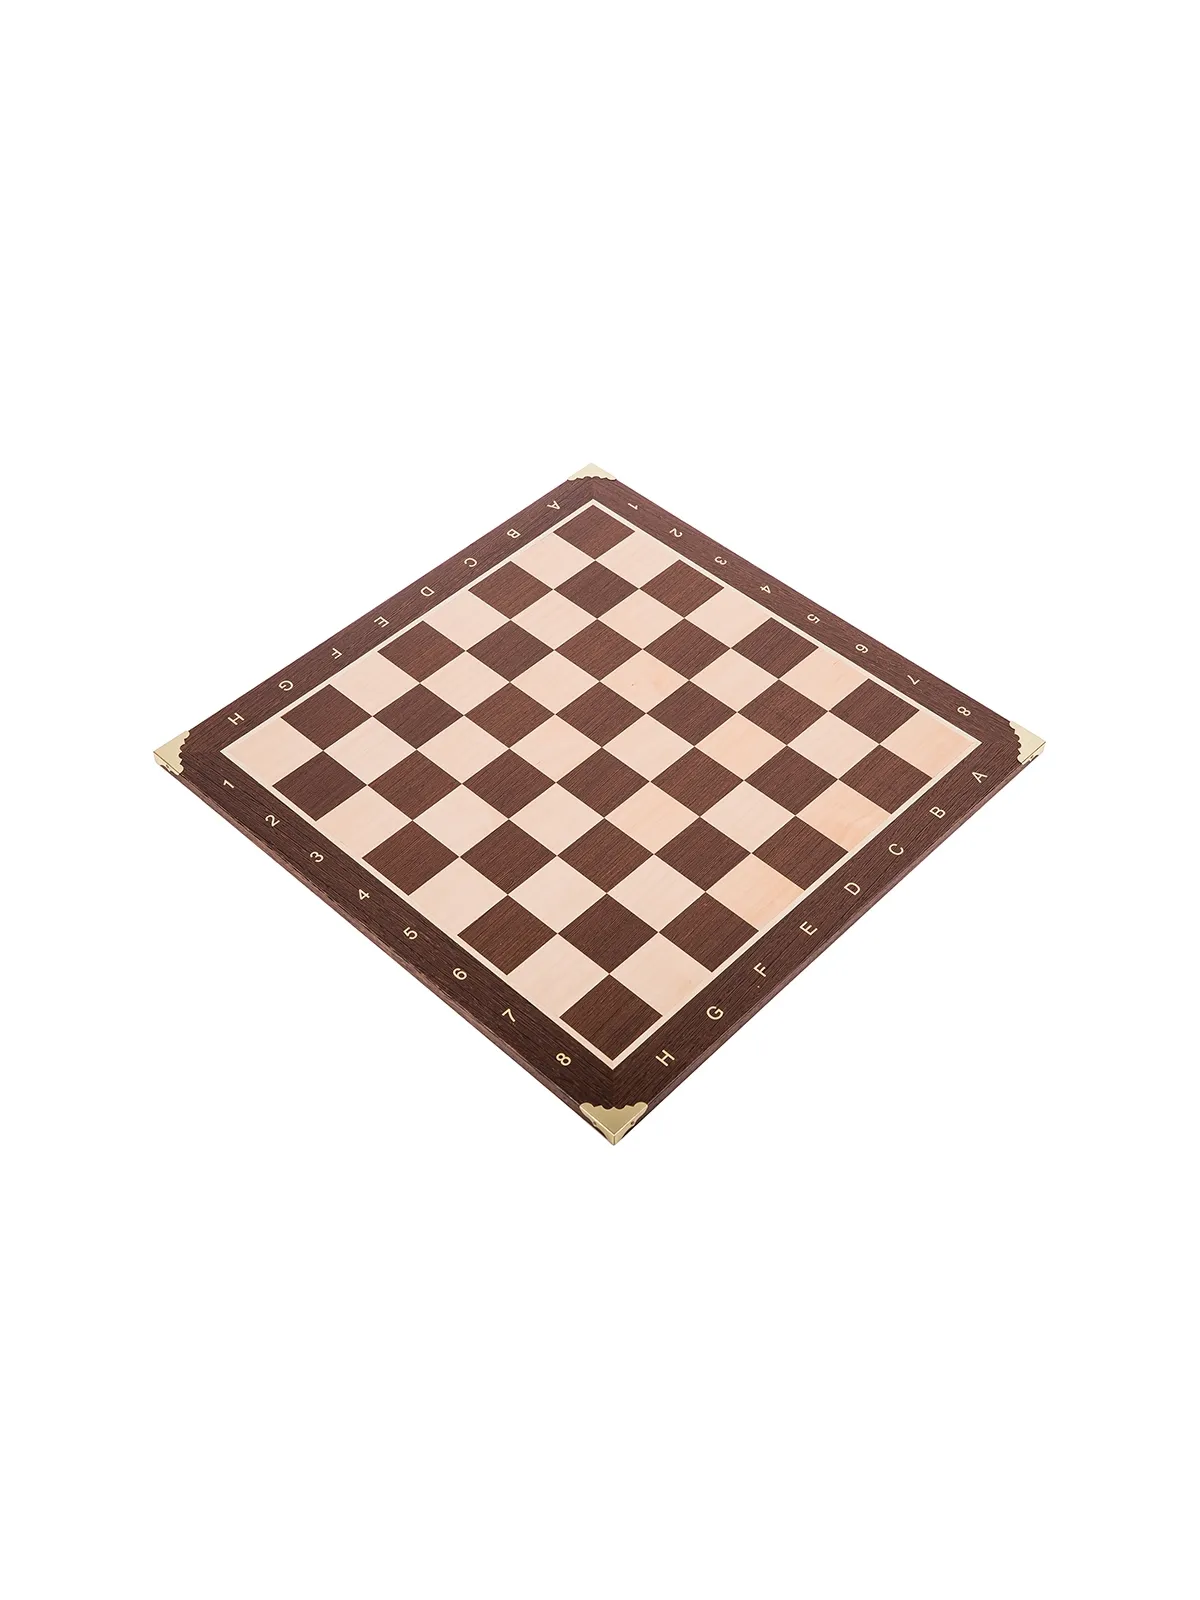 Chessboard No. 6 - Sweden